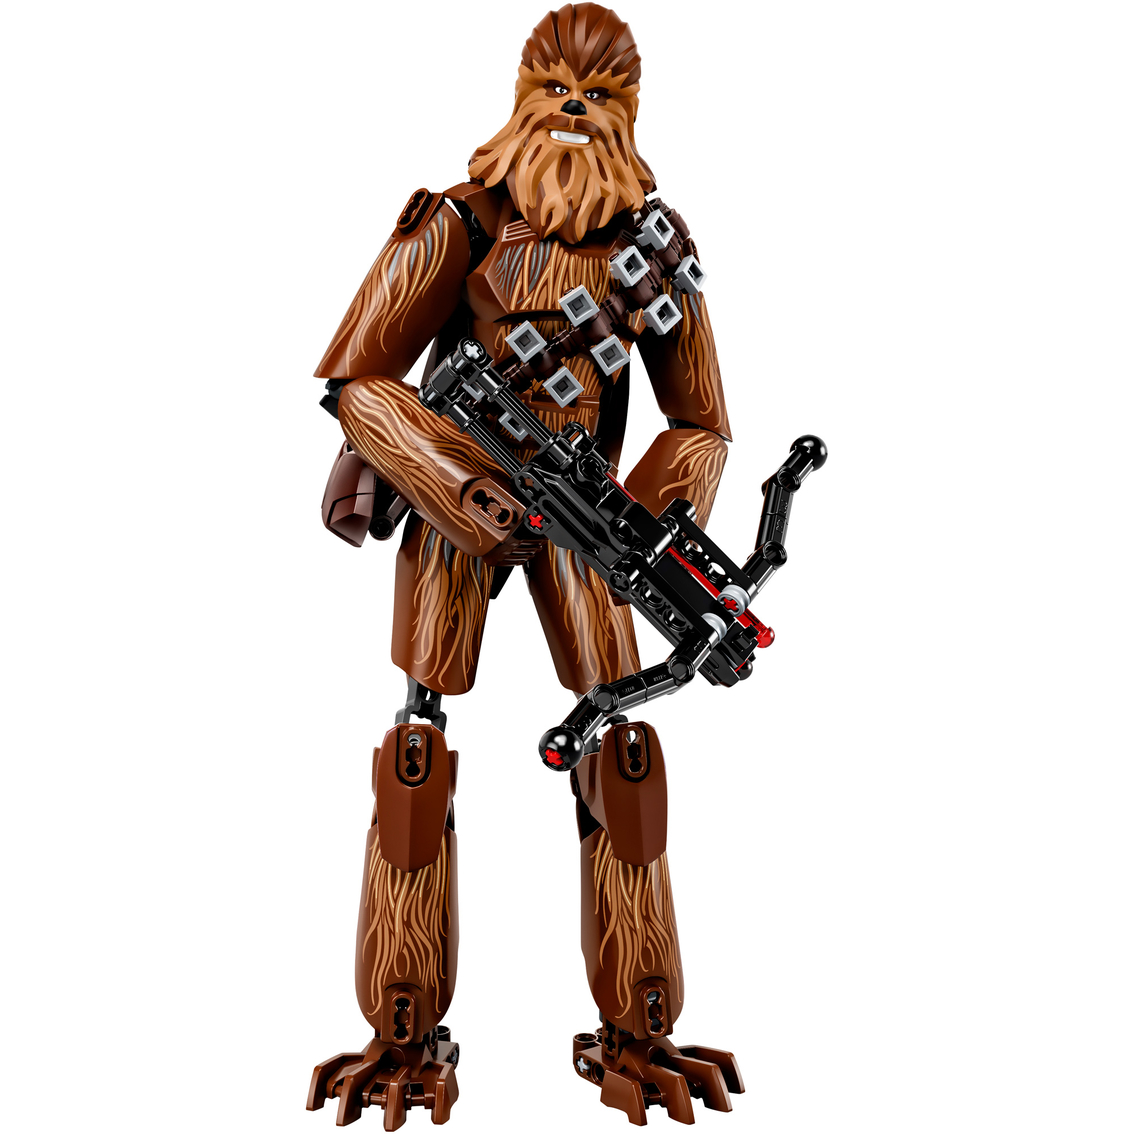 LEGO Star Wars Chewbacca - Image 2 of 2